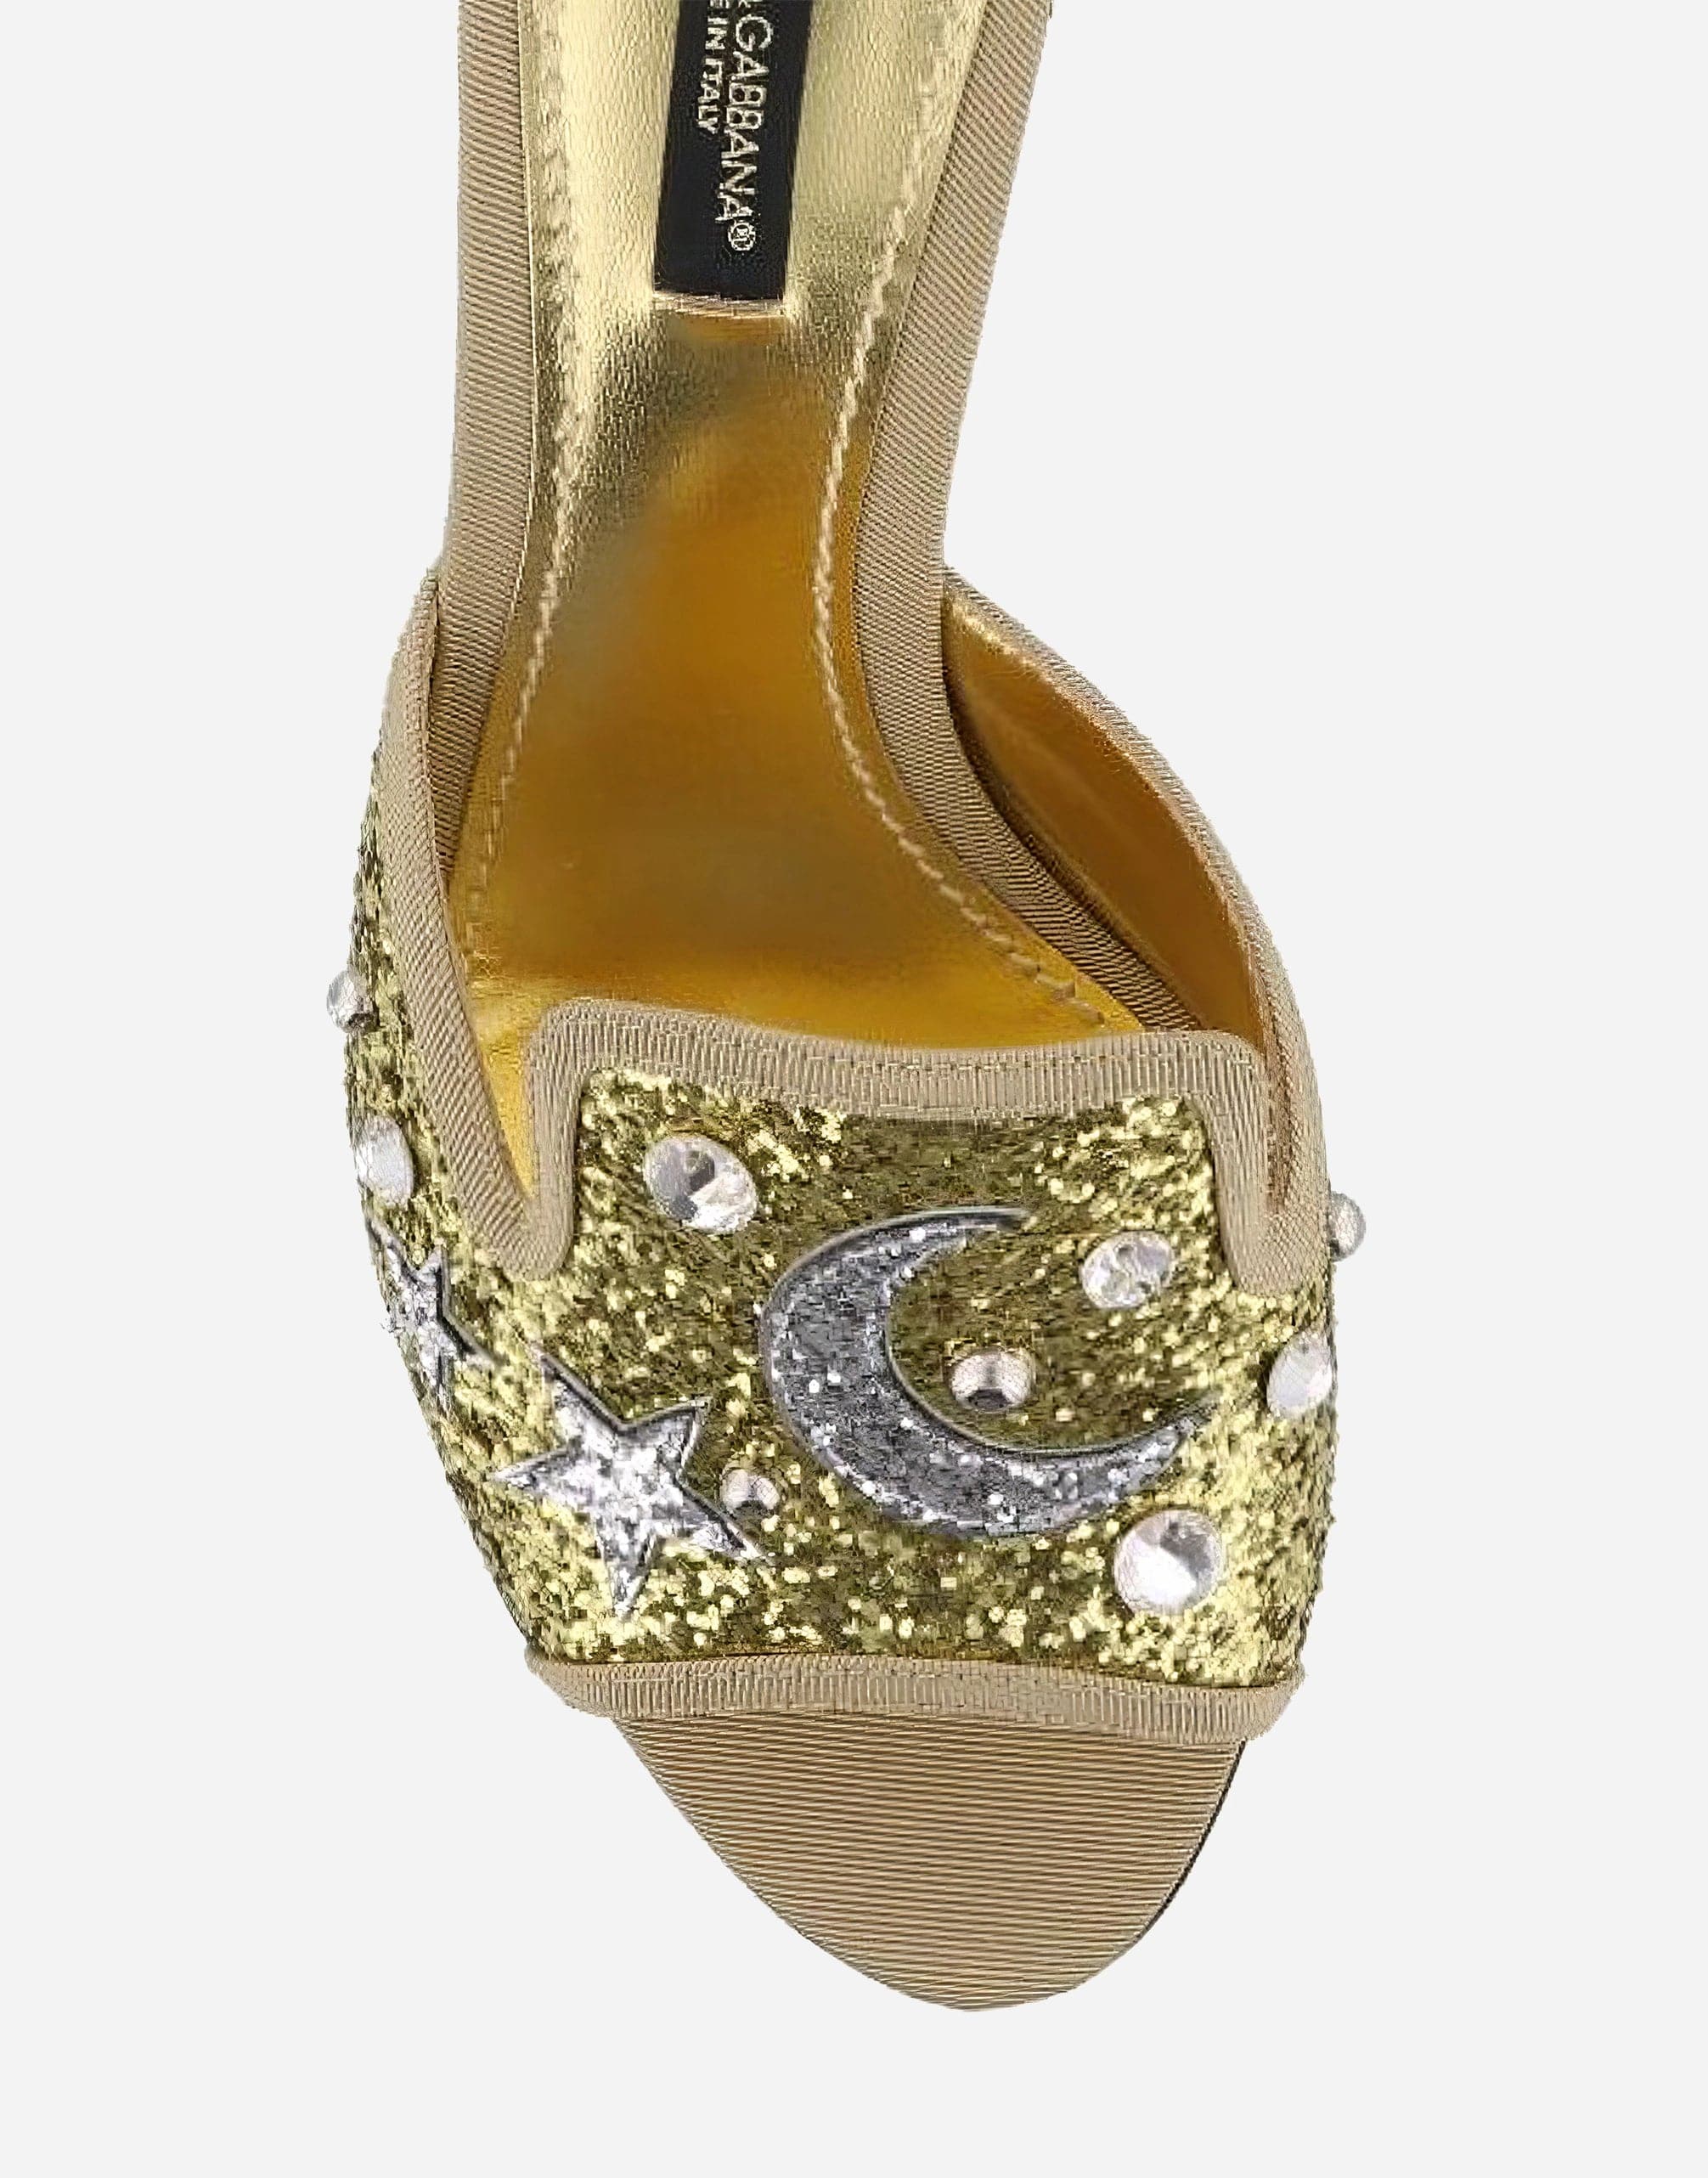 Dolce & Gabbana Jewel Gold-Tone Open Toe Sandals